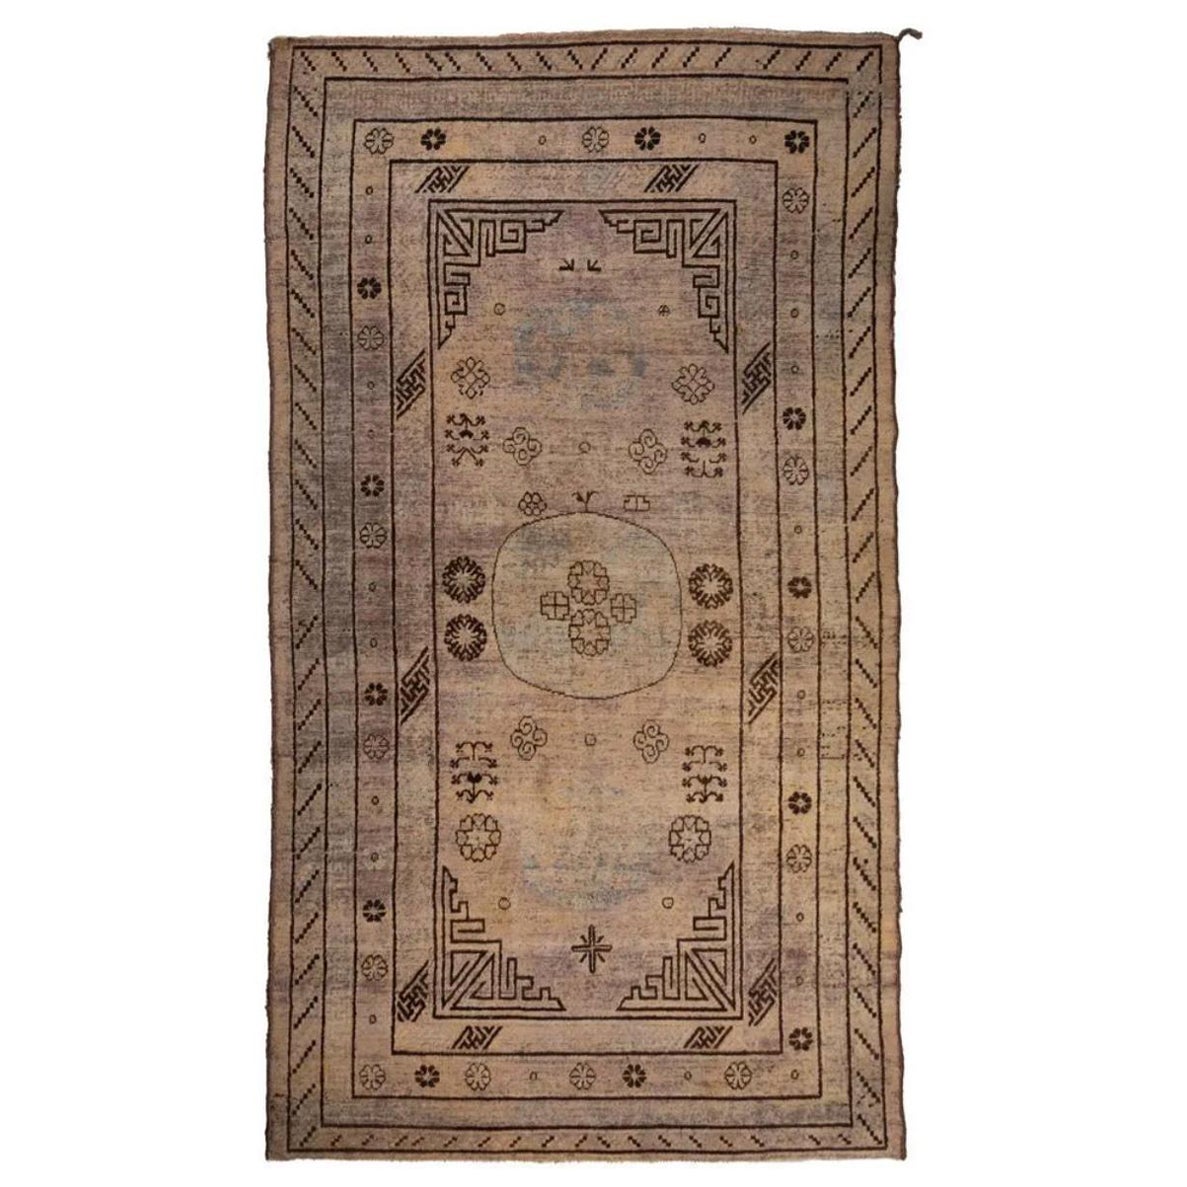 Antique Khotan Samarkand Wool Medallion Carpet (11’ 8” x 6’ 6”) For Sale